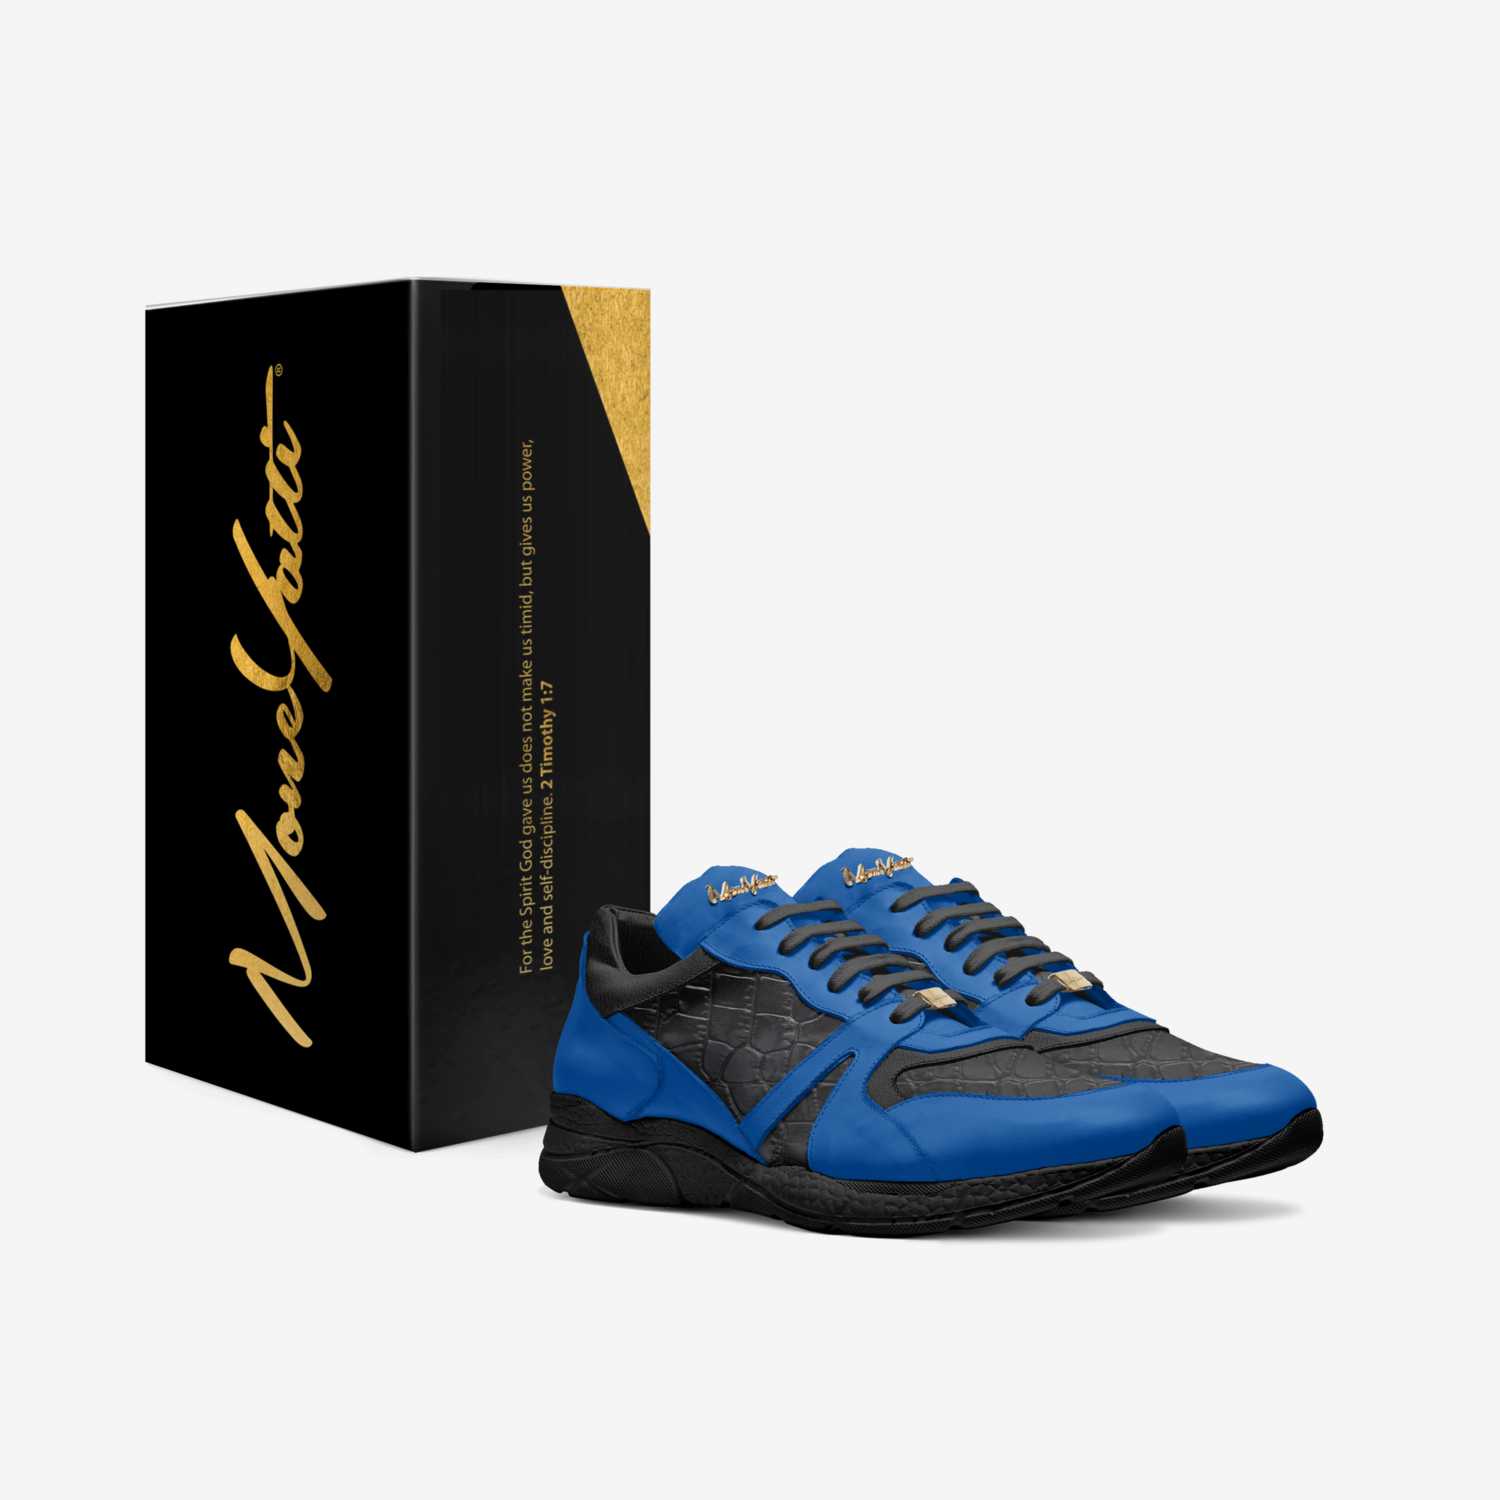 Moneyatti MP04 custom made in Italy shoes by Moneyatti Brand | Box view